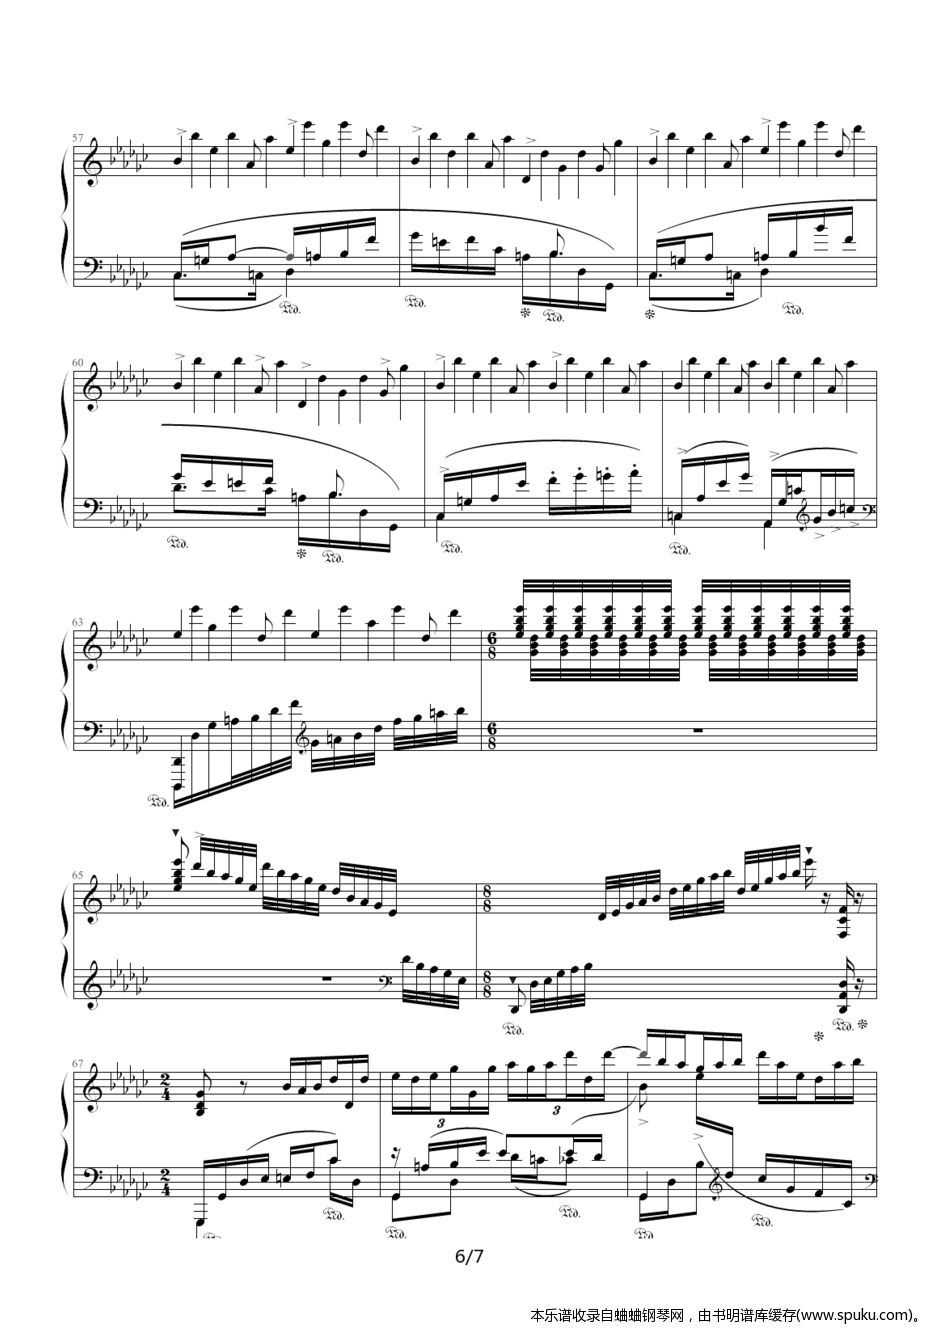 FrChopin6-钢琴谱-曲谱